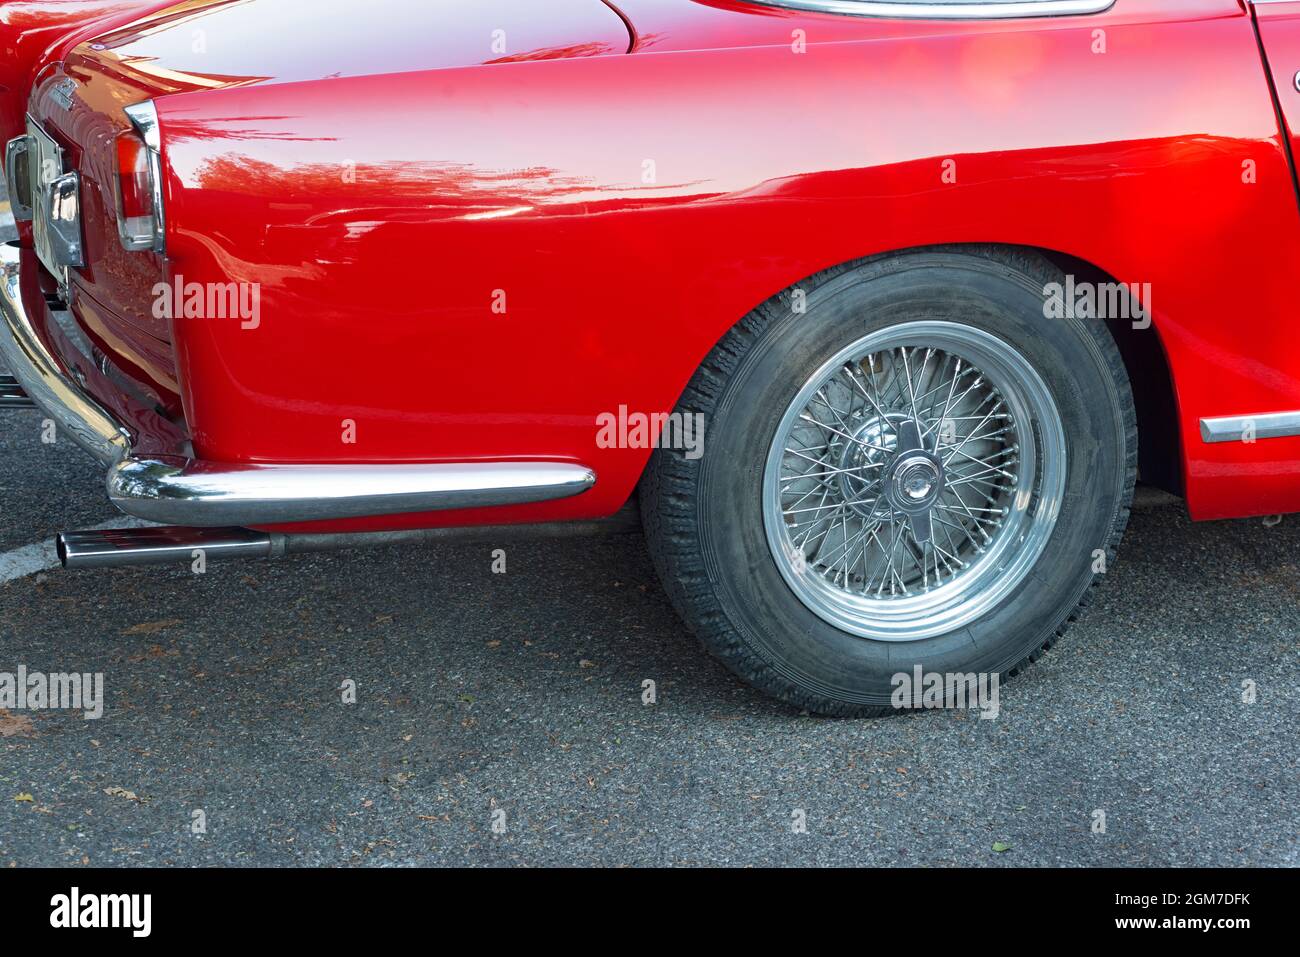 Front View of  Red Ferrari 250 Grandturismo Stock Photo